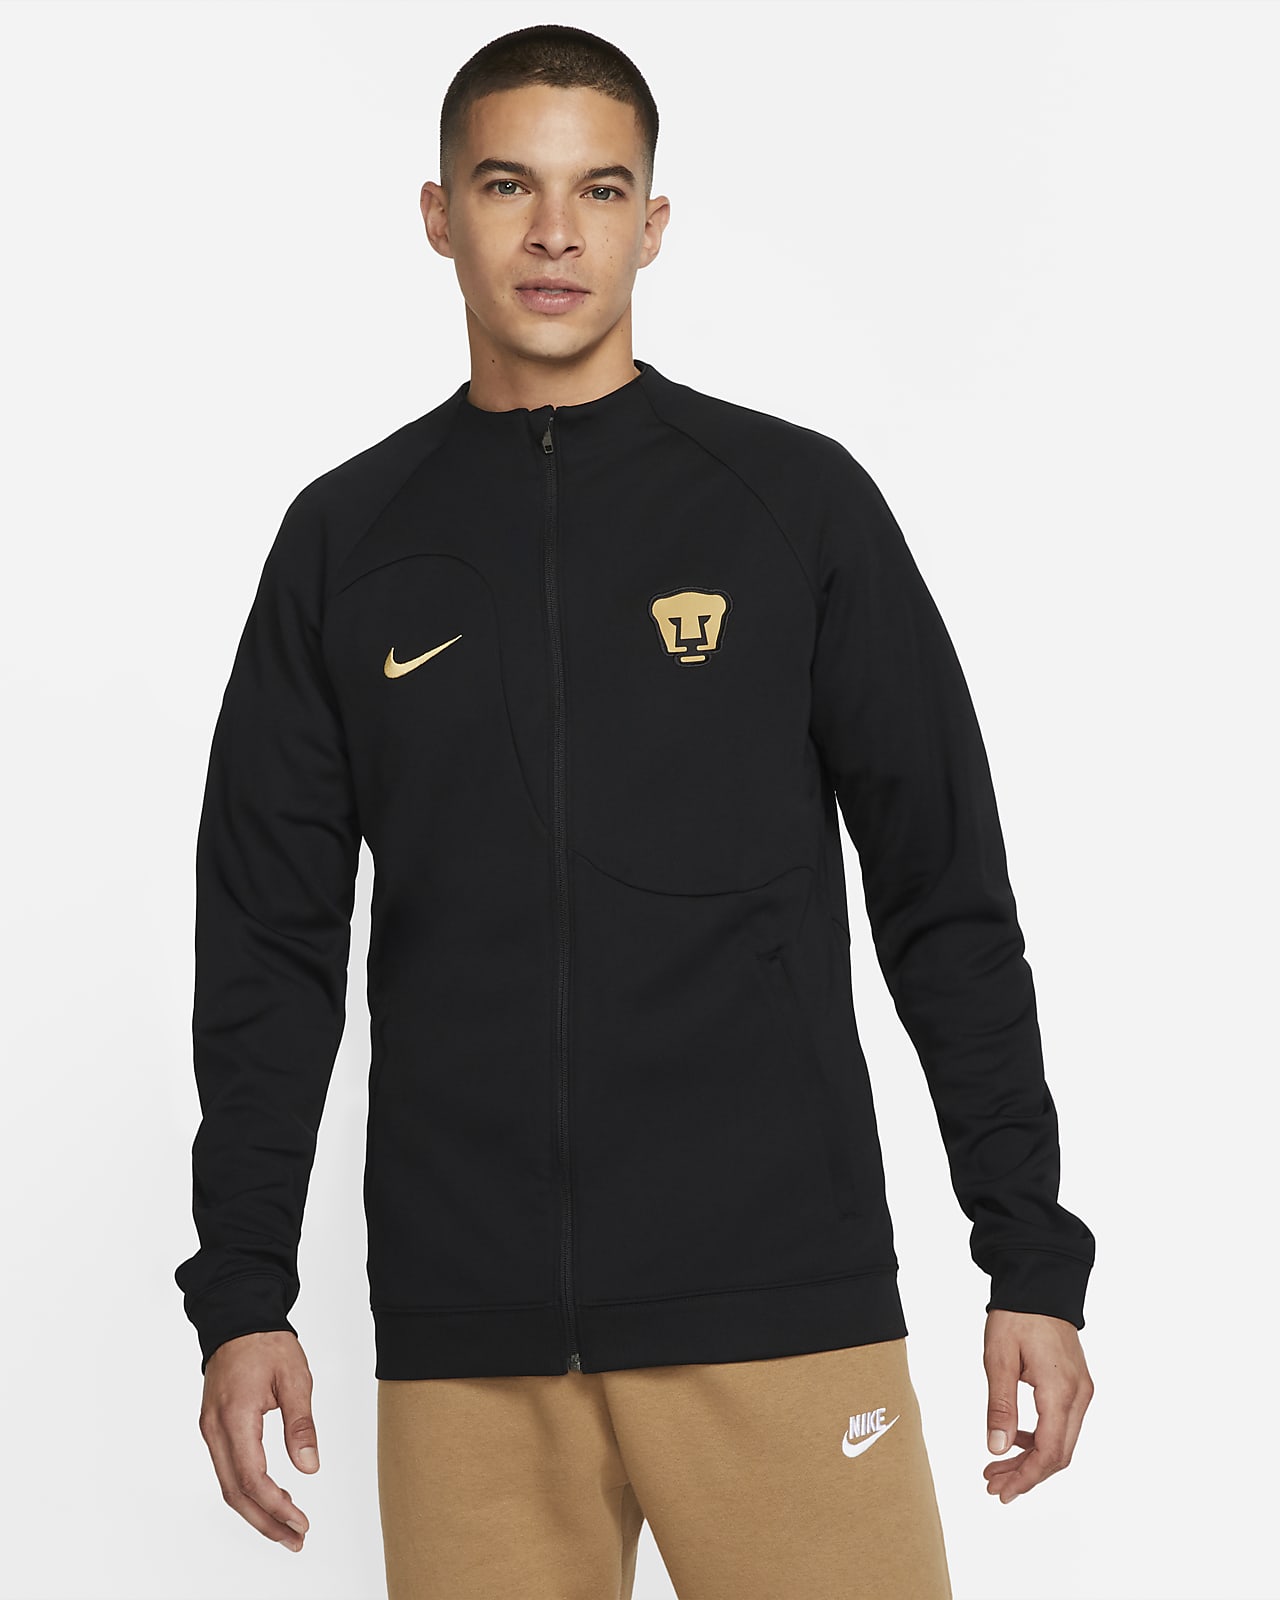 Nike Academy Men's Dri-FIT Soccer Jacket.